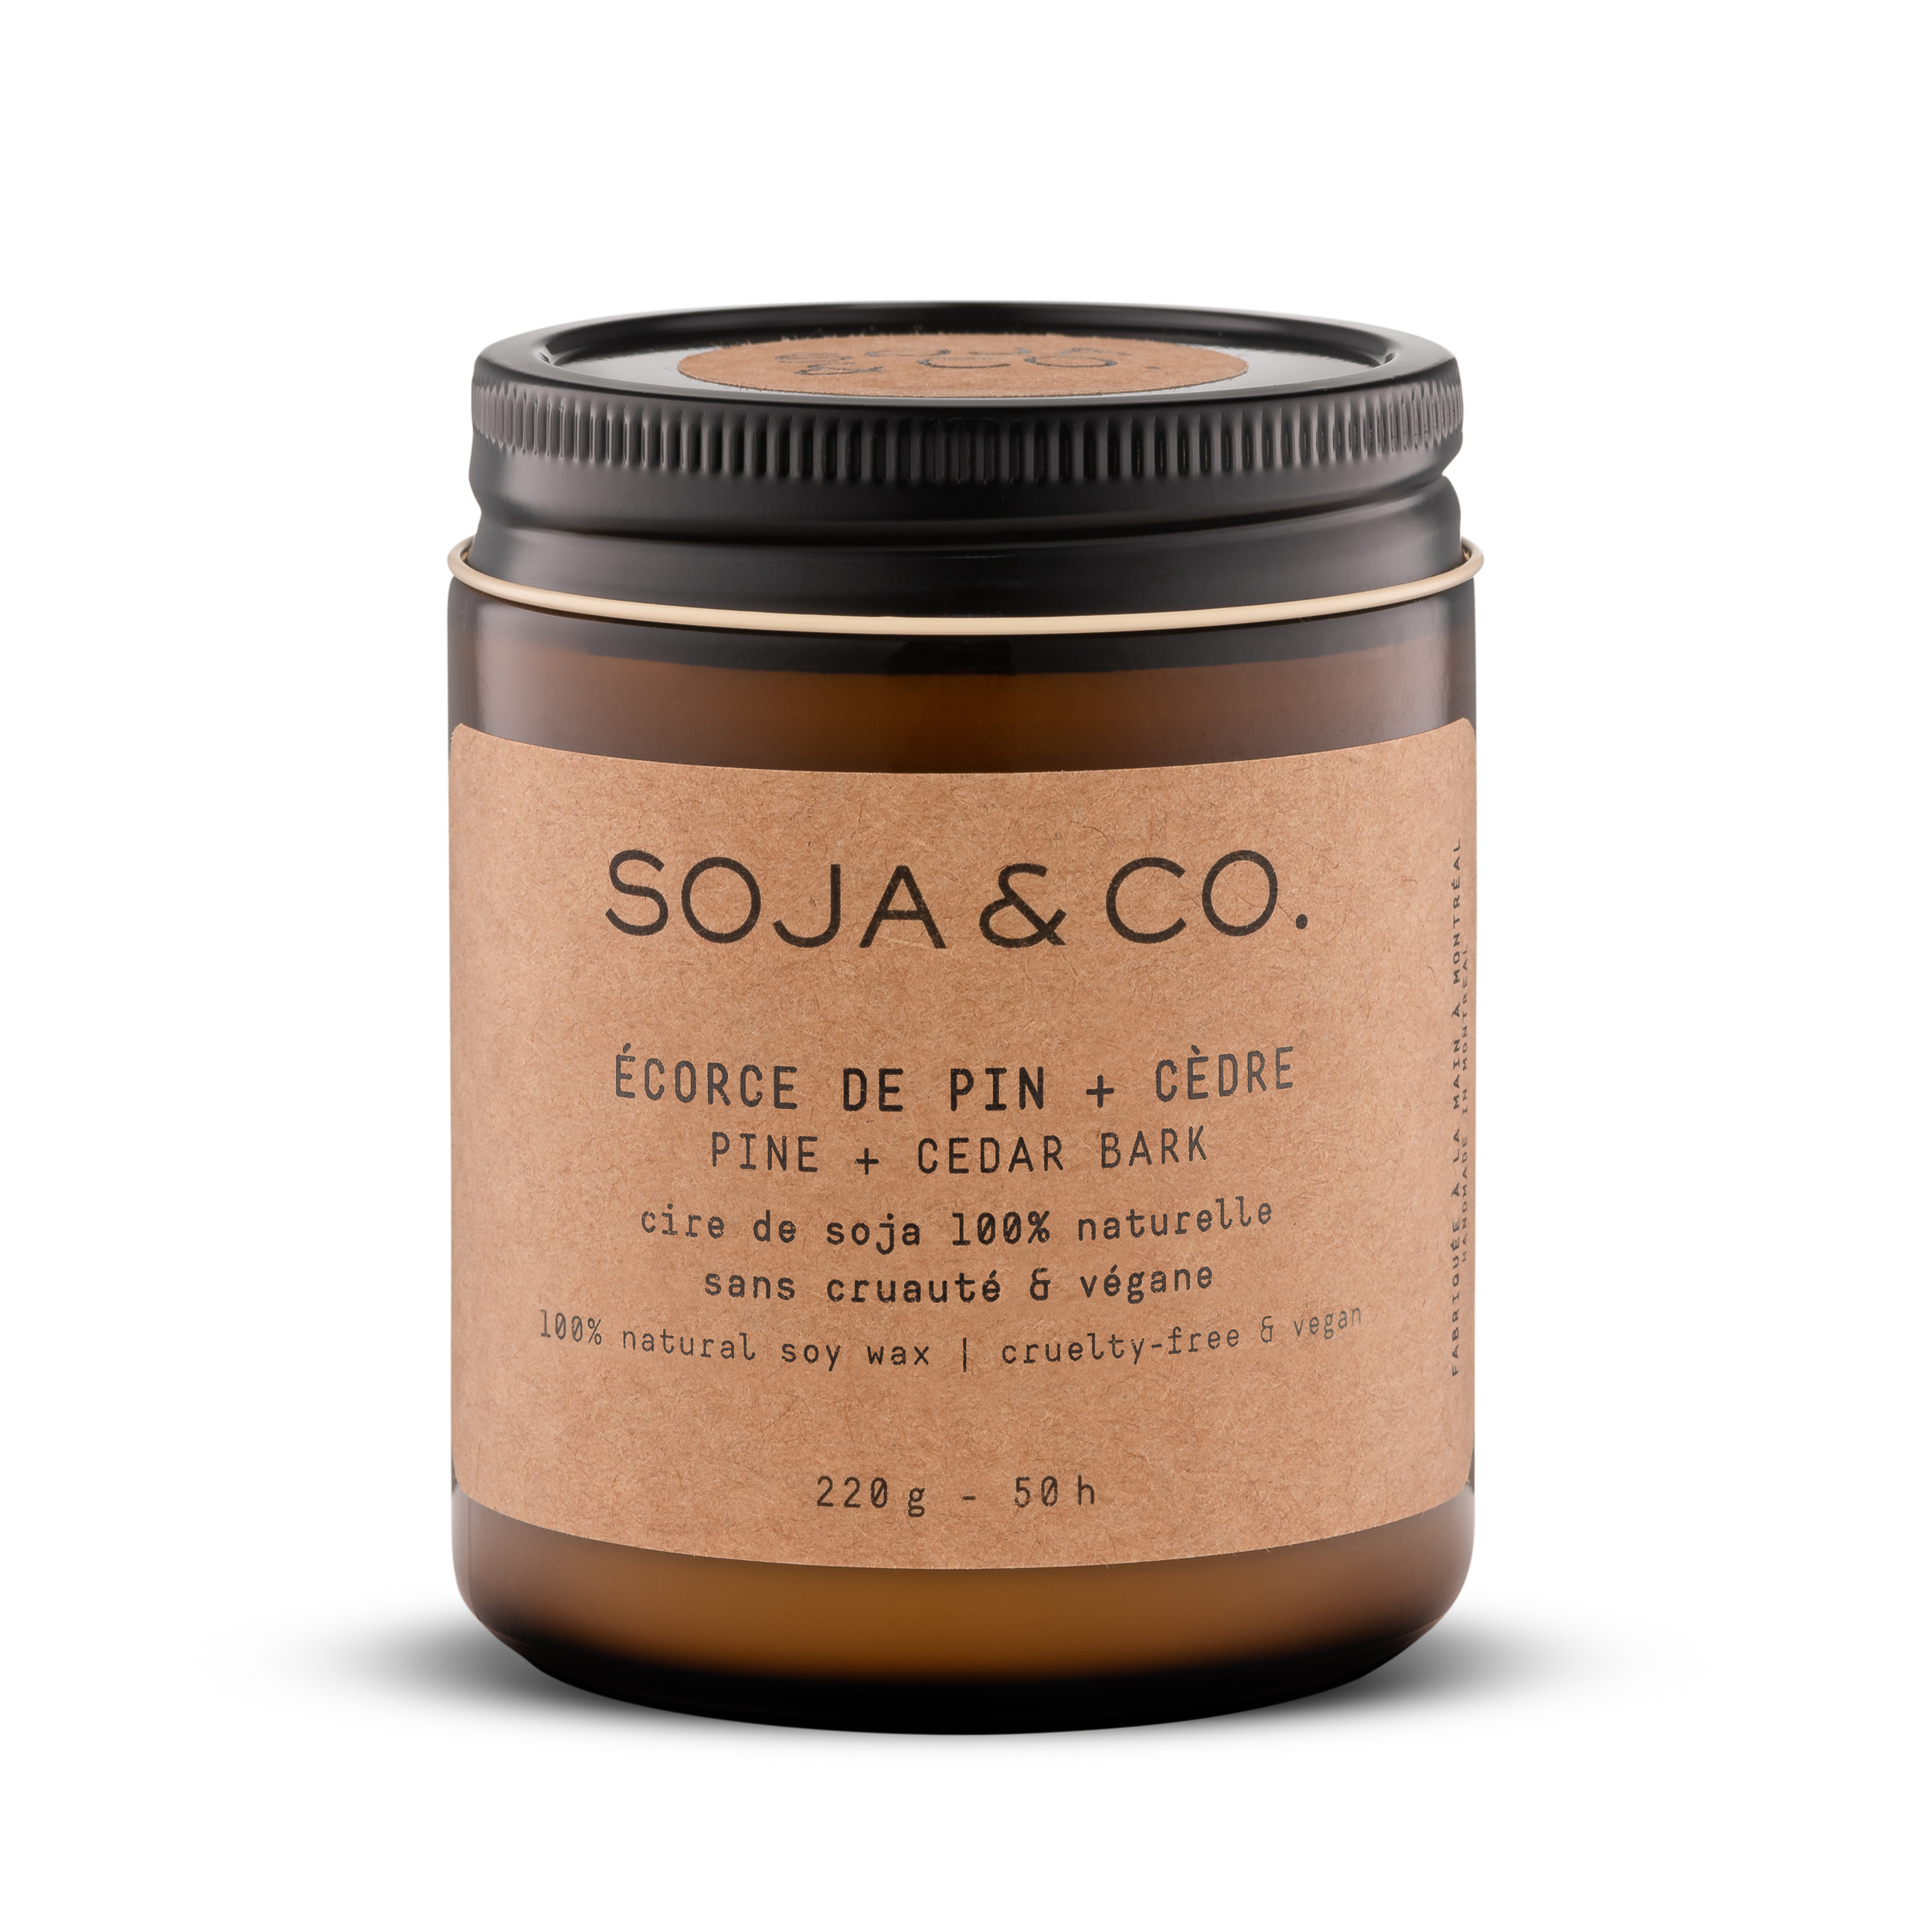 SOJA&CO. Soy Wax Candle — Pine + Cedar Bark 8oz